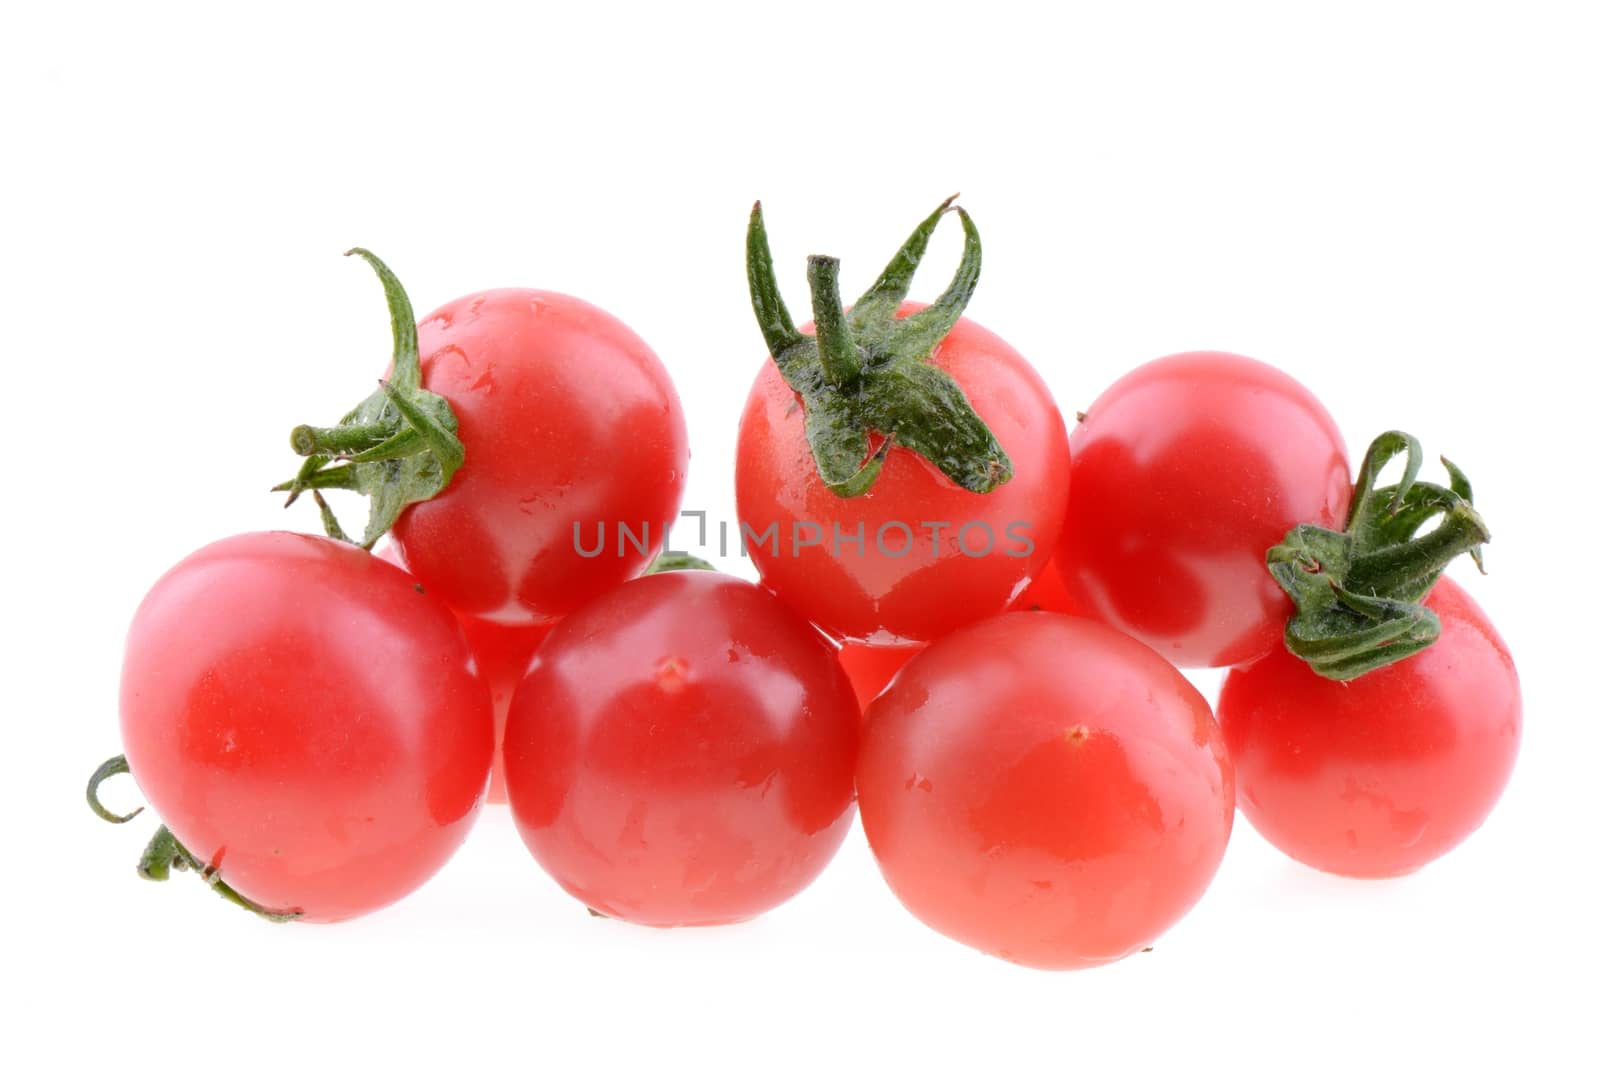 Cherry tomato fruits on a white background